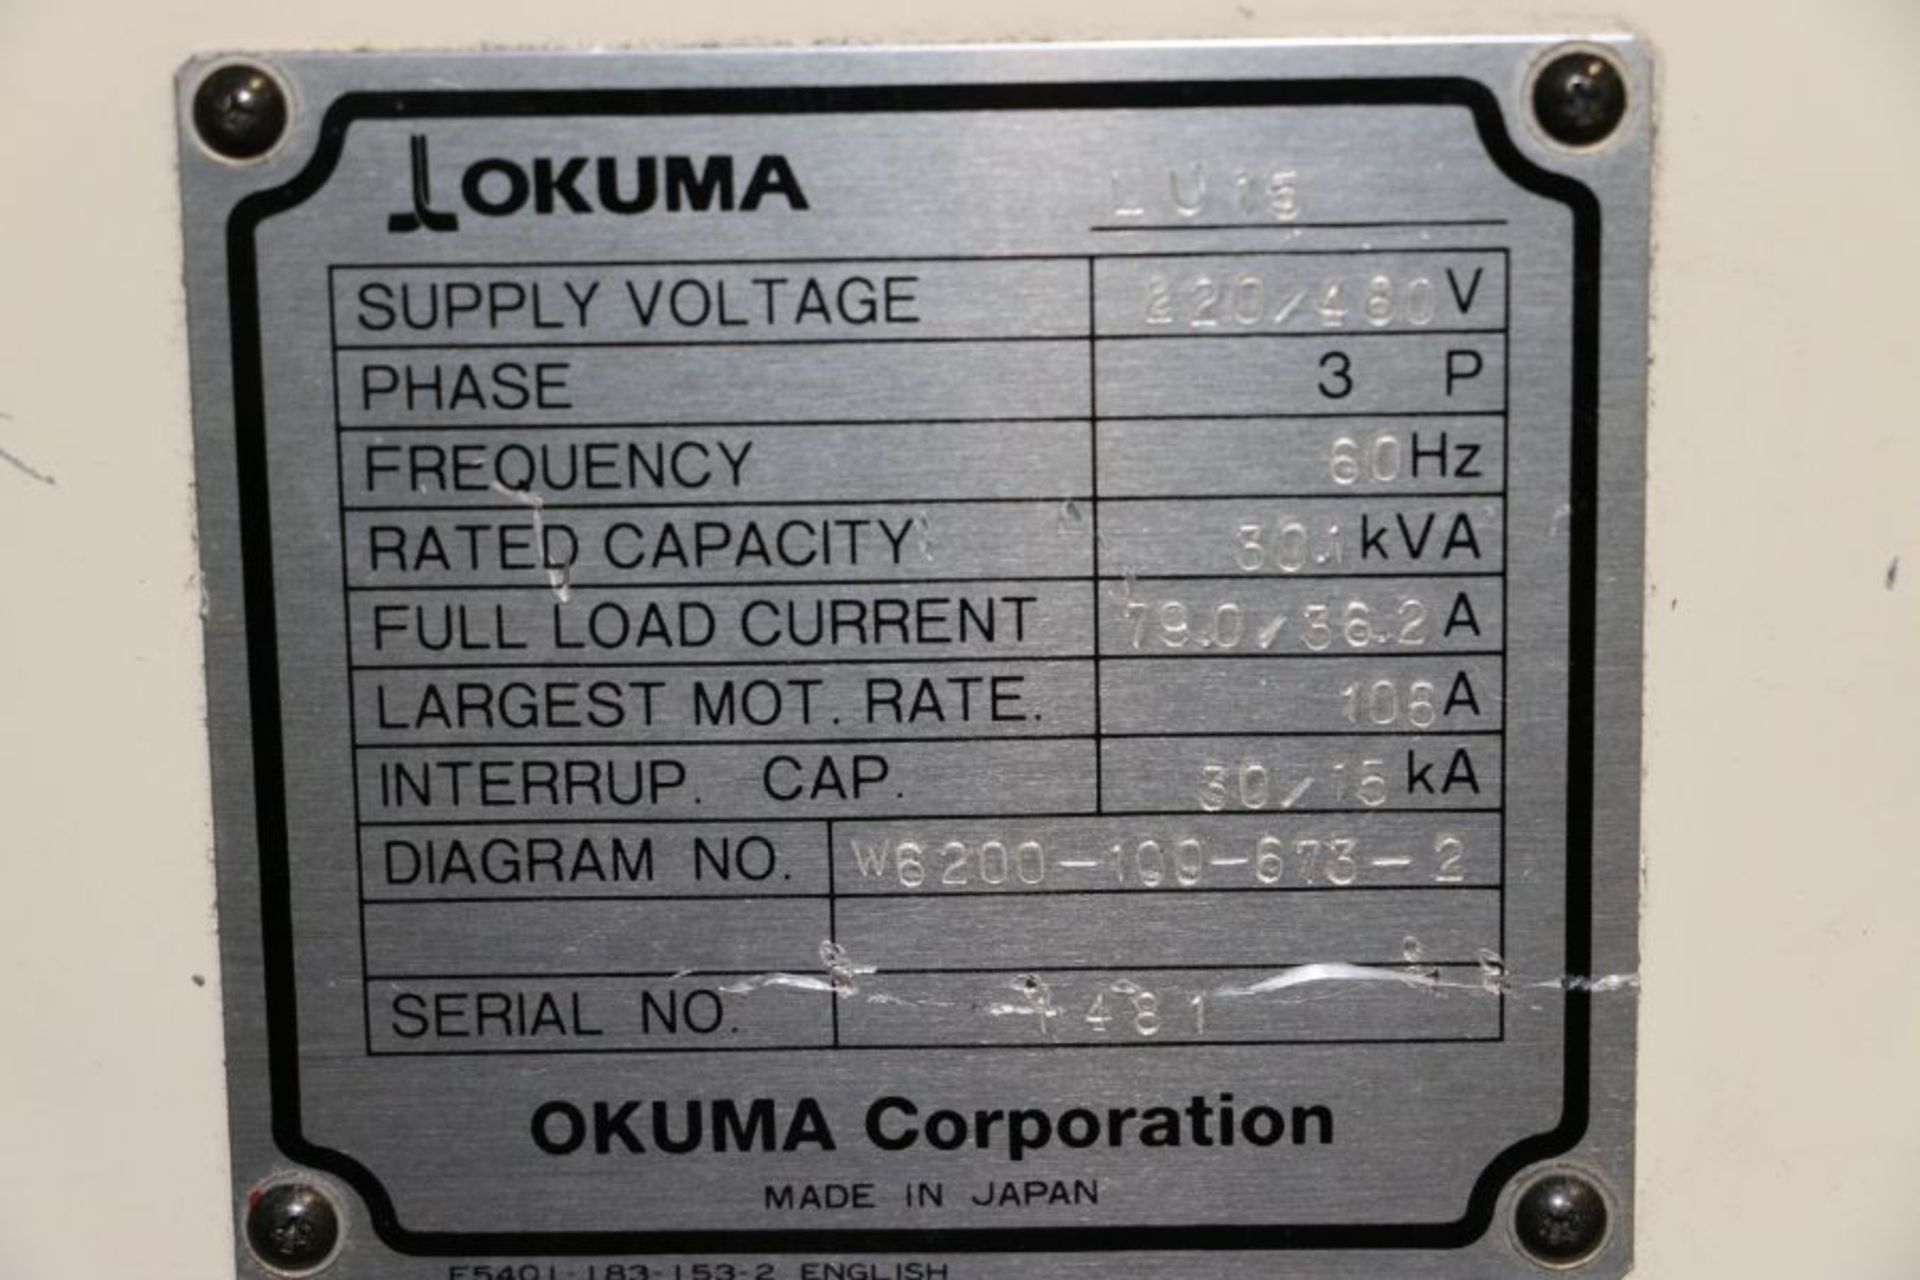 Okuma Impact LU-15 4-Axis, OSP-UI00L control, 10" 3 Jaw Chuck, 12 Position Upper & 8 Position - Image 12 of 12